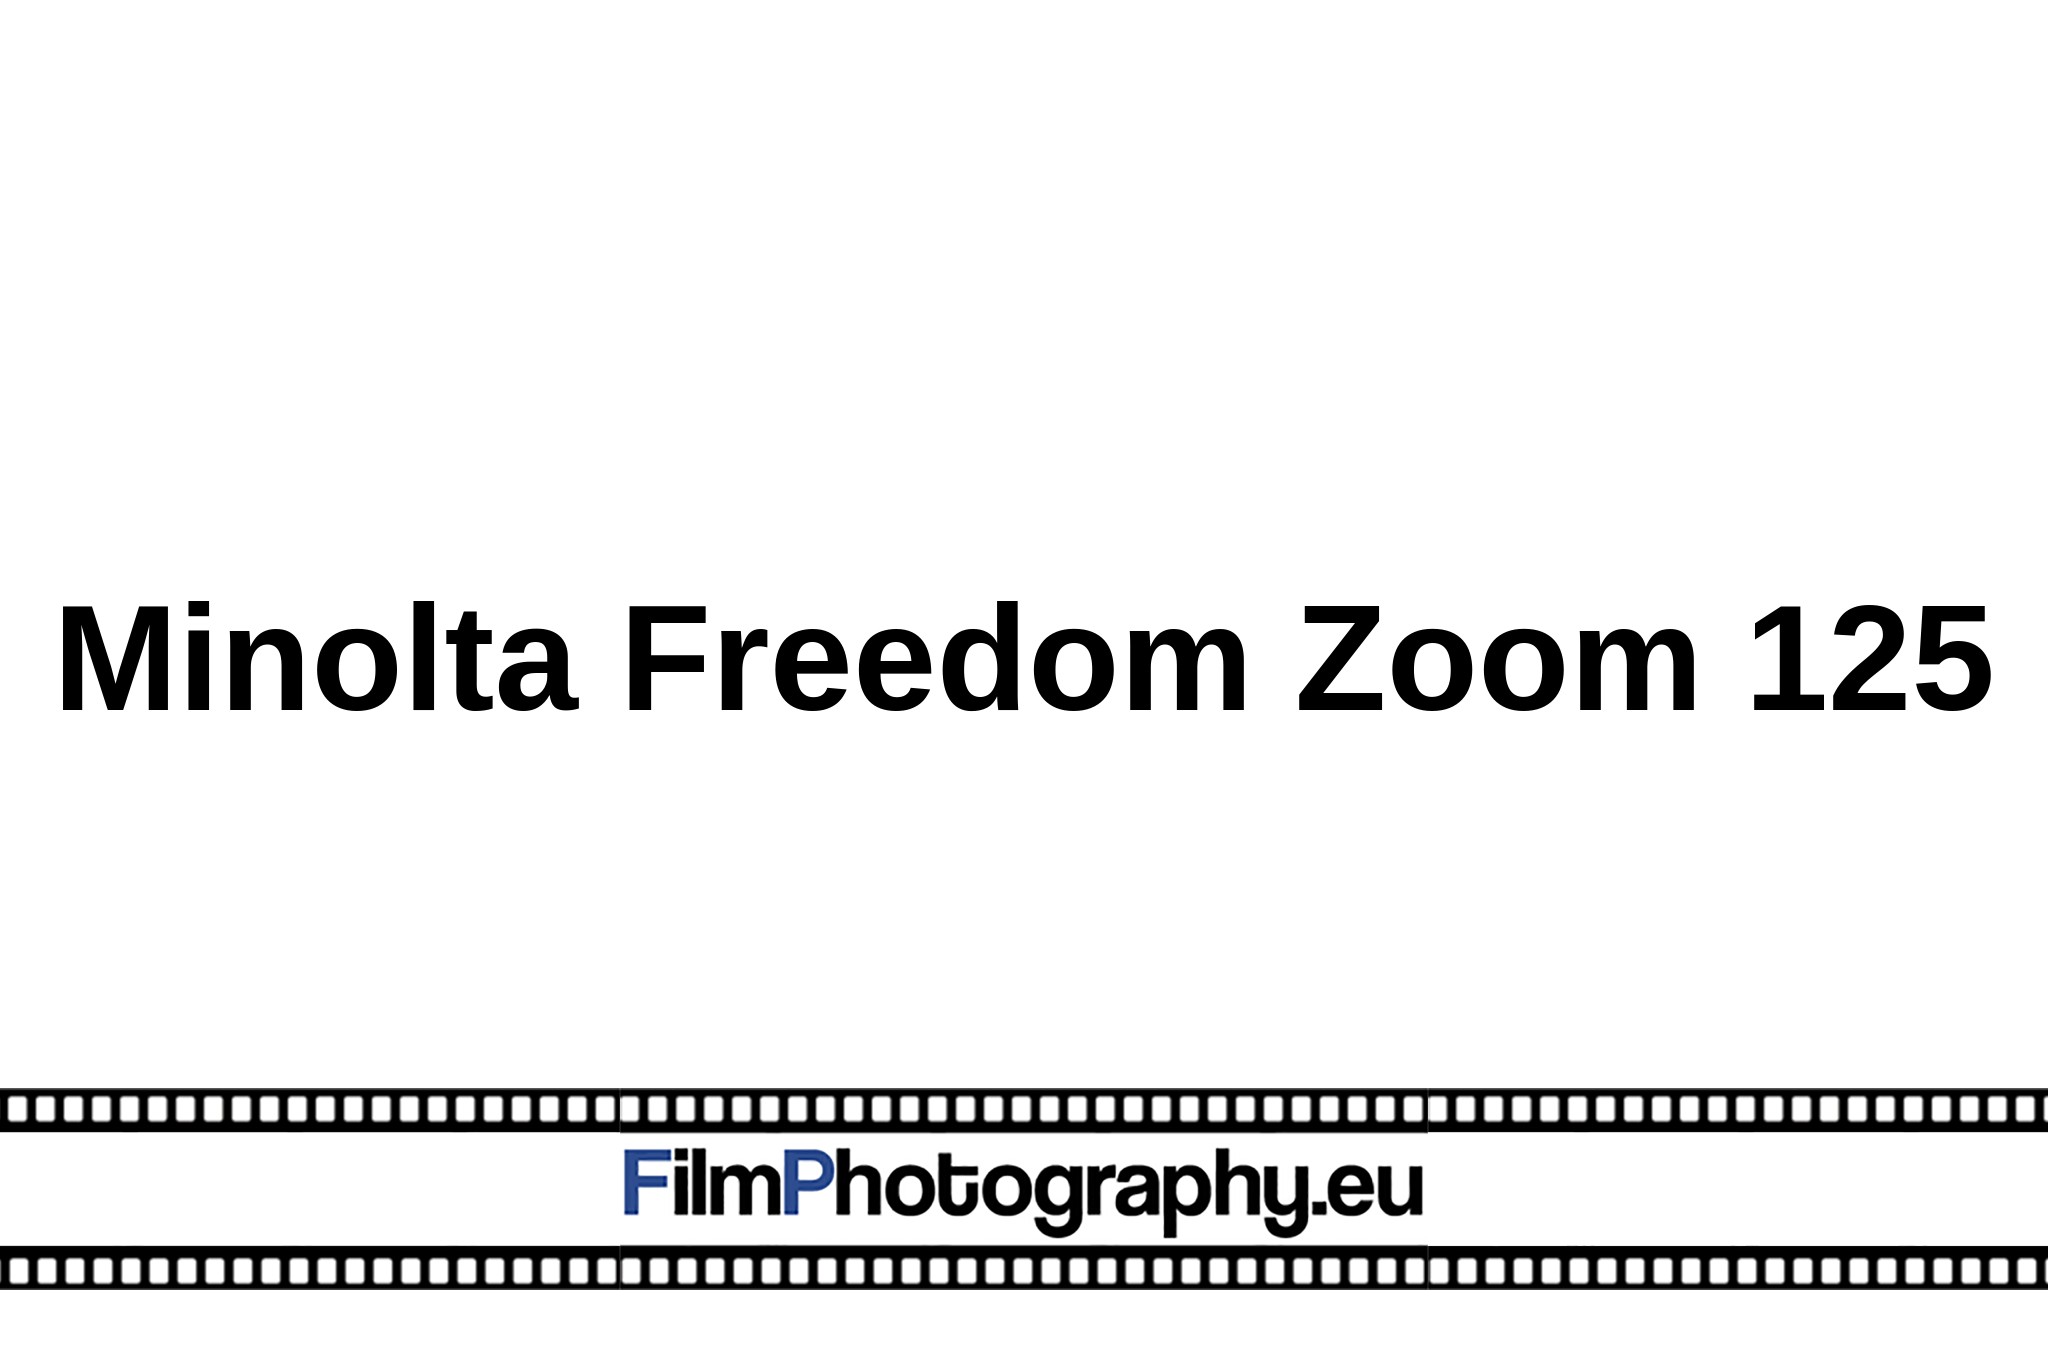 Minolta Freedom Zoom 125 - Functionality, Films & Batteries